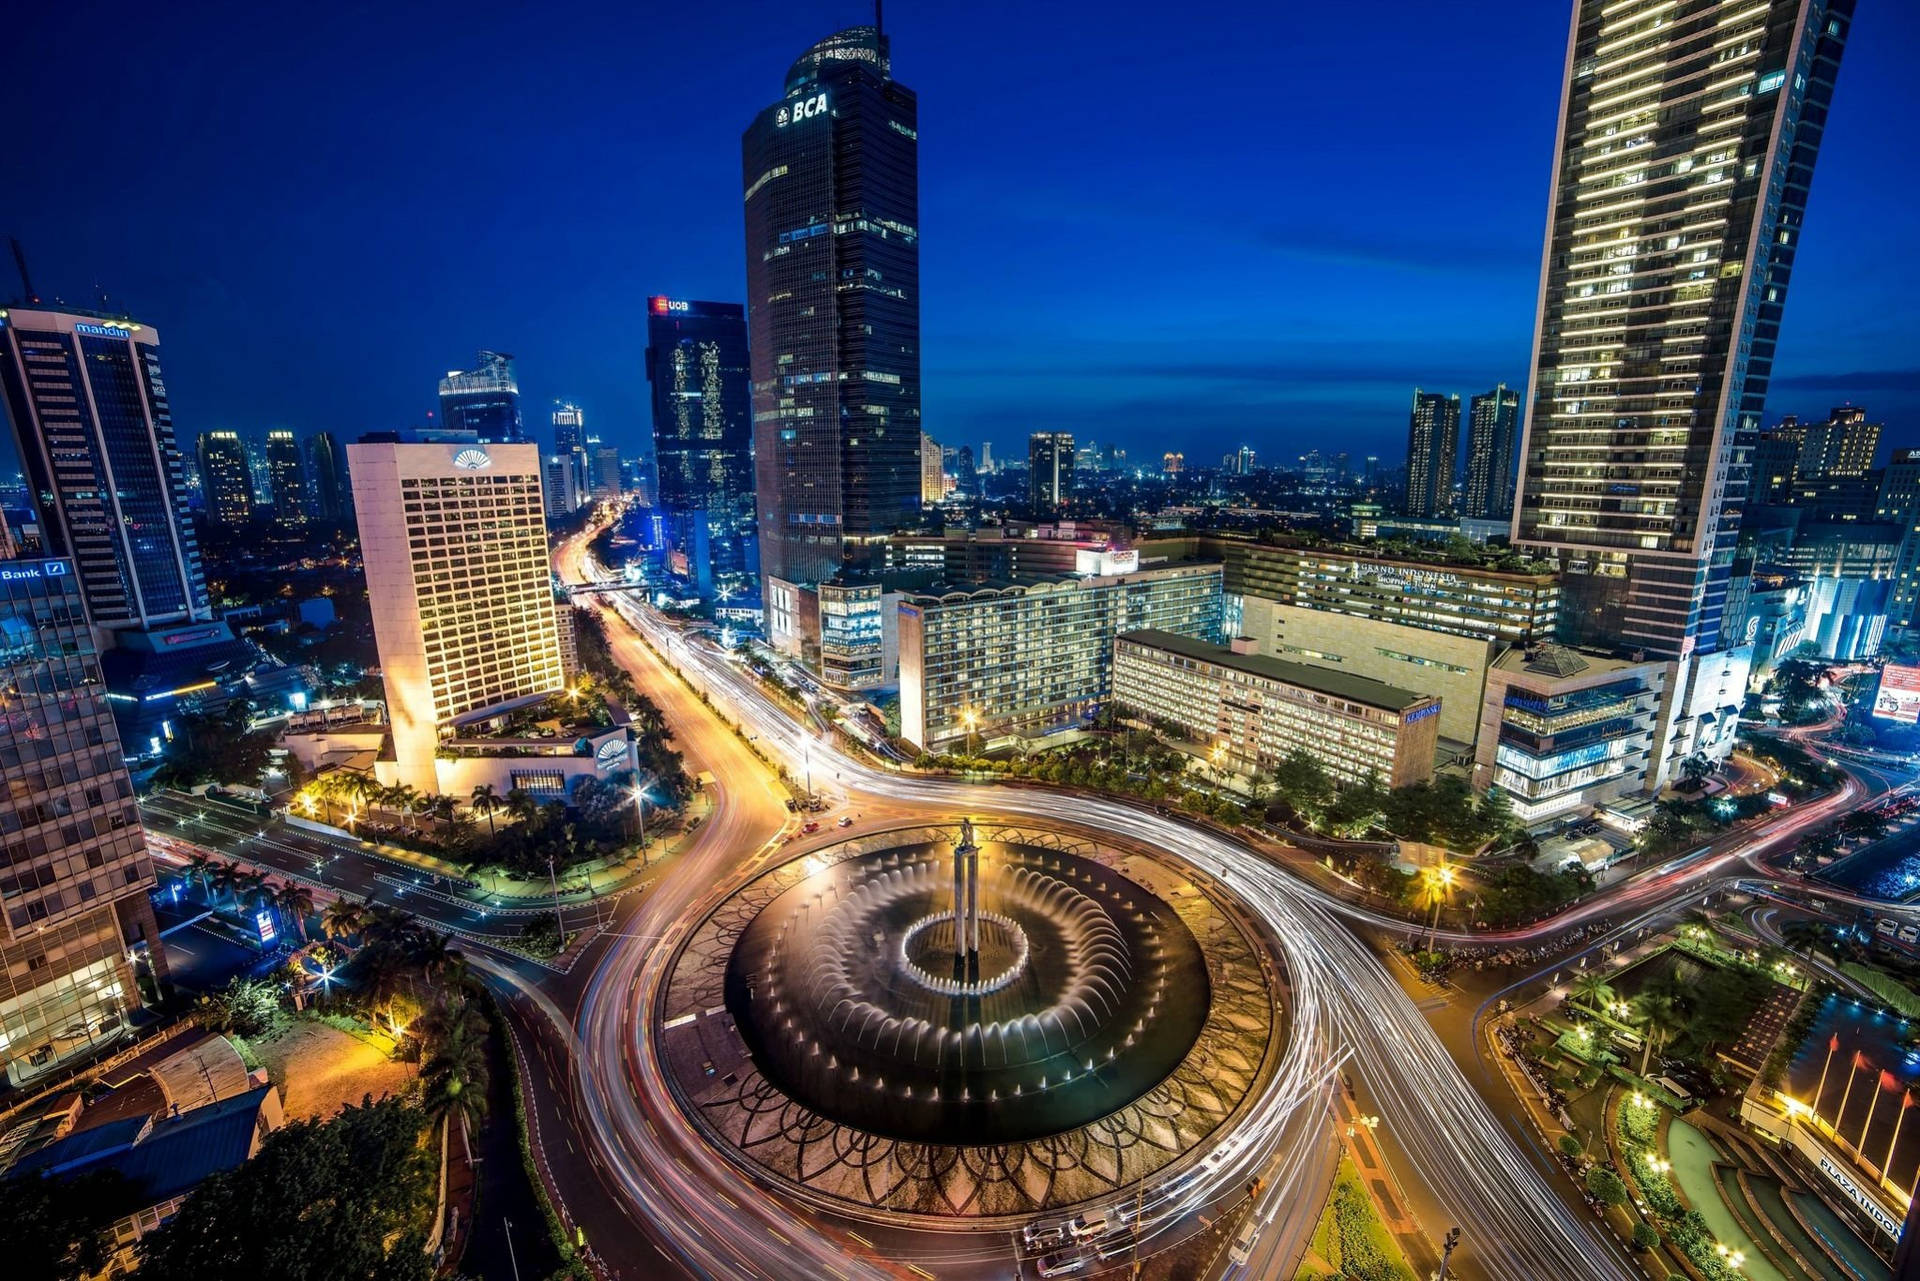 Wallpaper City Guide Jakarta by Phaidon - Bookworm Hanoi